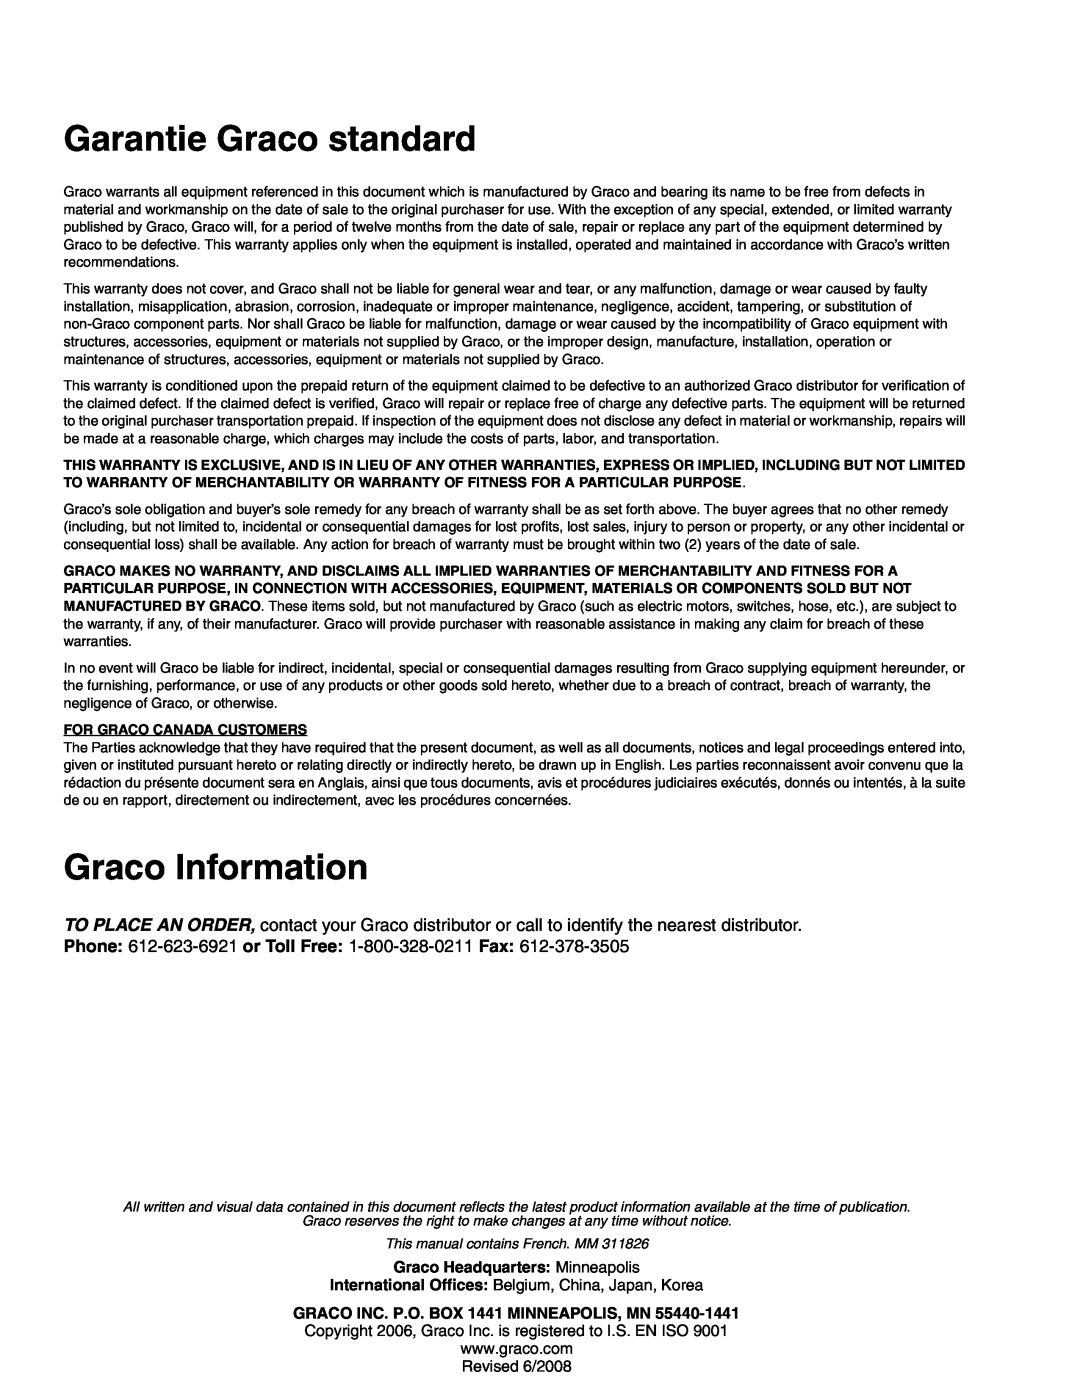 Graco TI8900a, TI8885a manual Garantie Graco standard, Graco Information, Graco Headquarters Minneapolis 